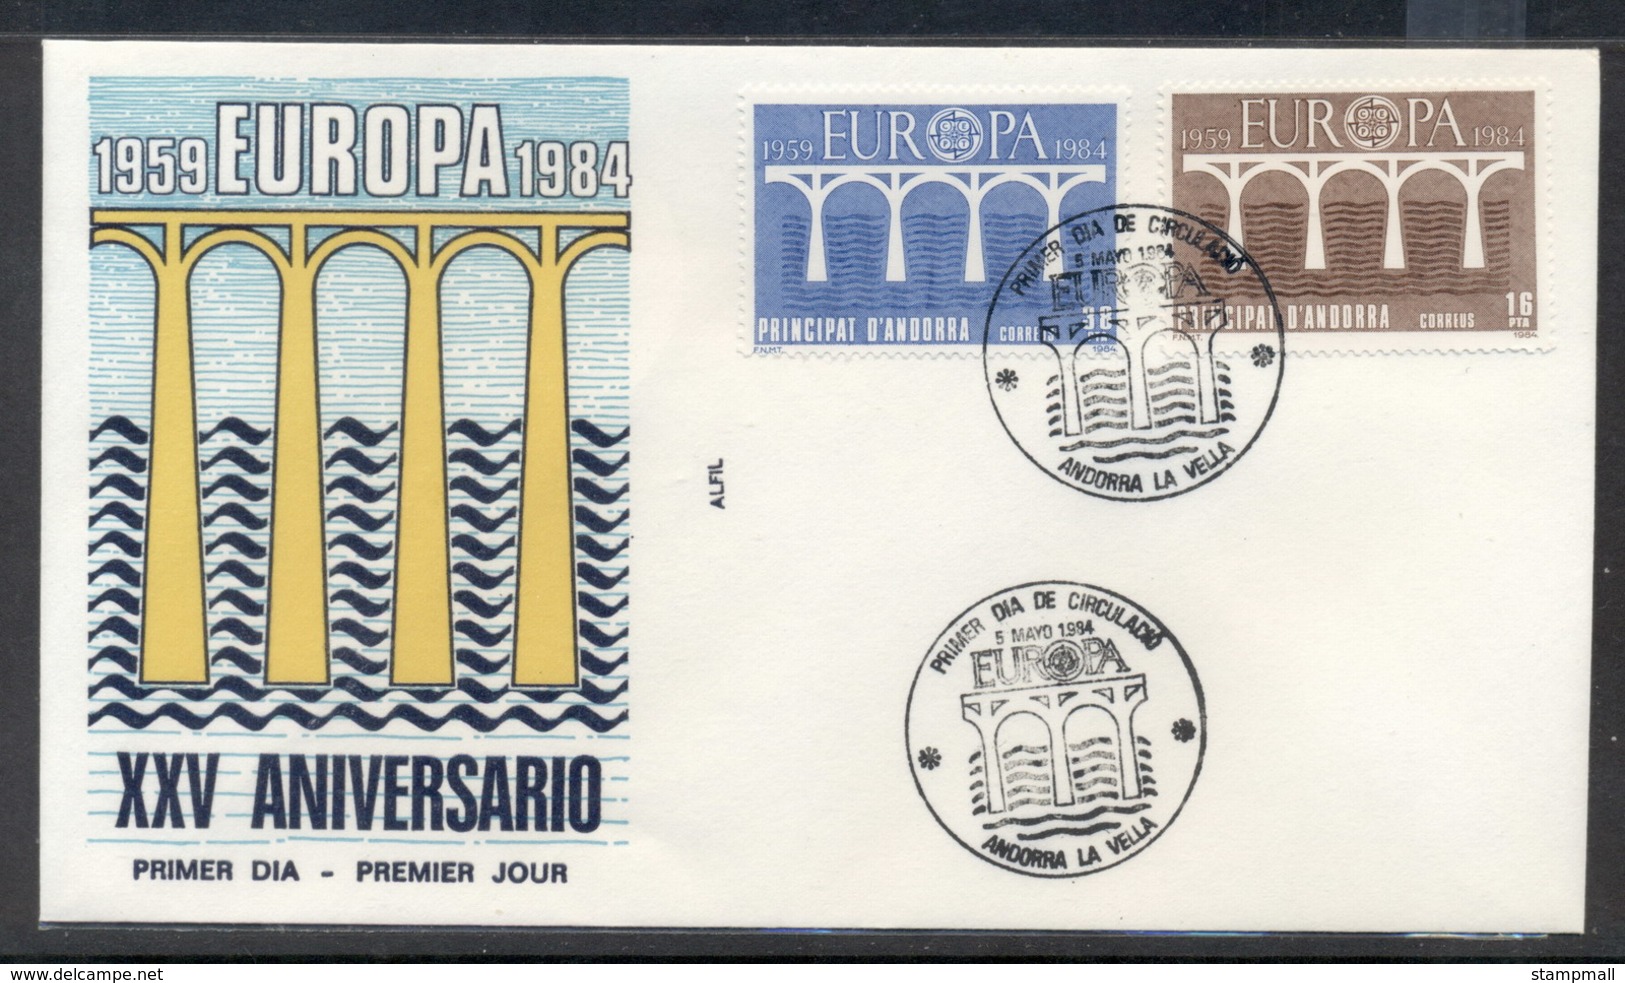 Andorra (Sp.) 1984 Europa Bridge FDC - Covers & Documents